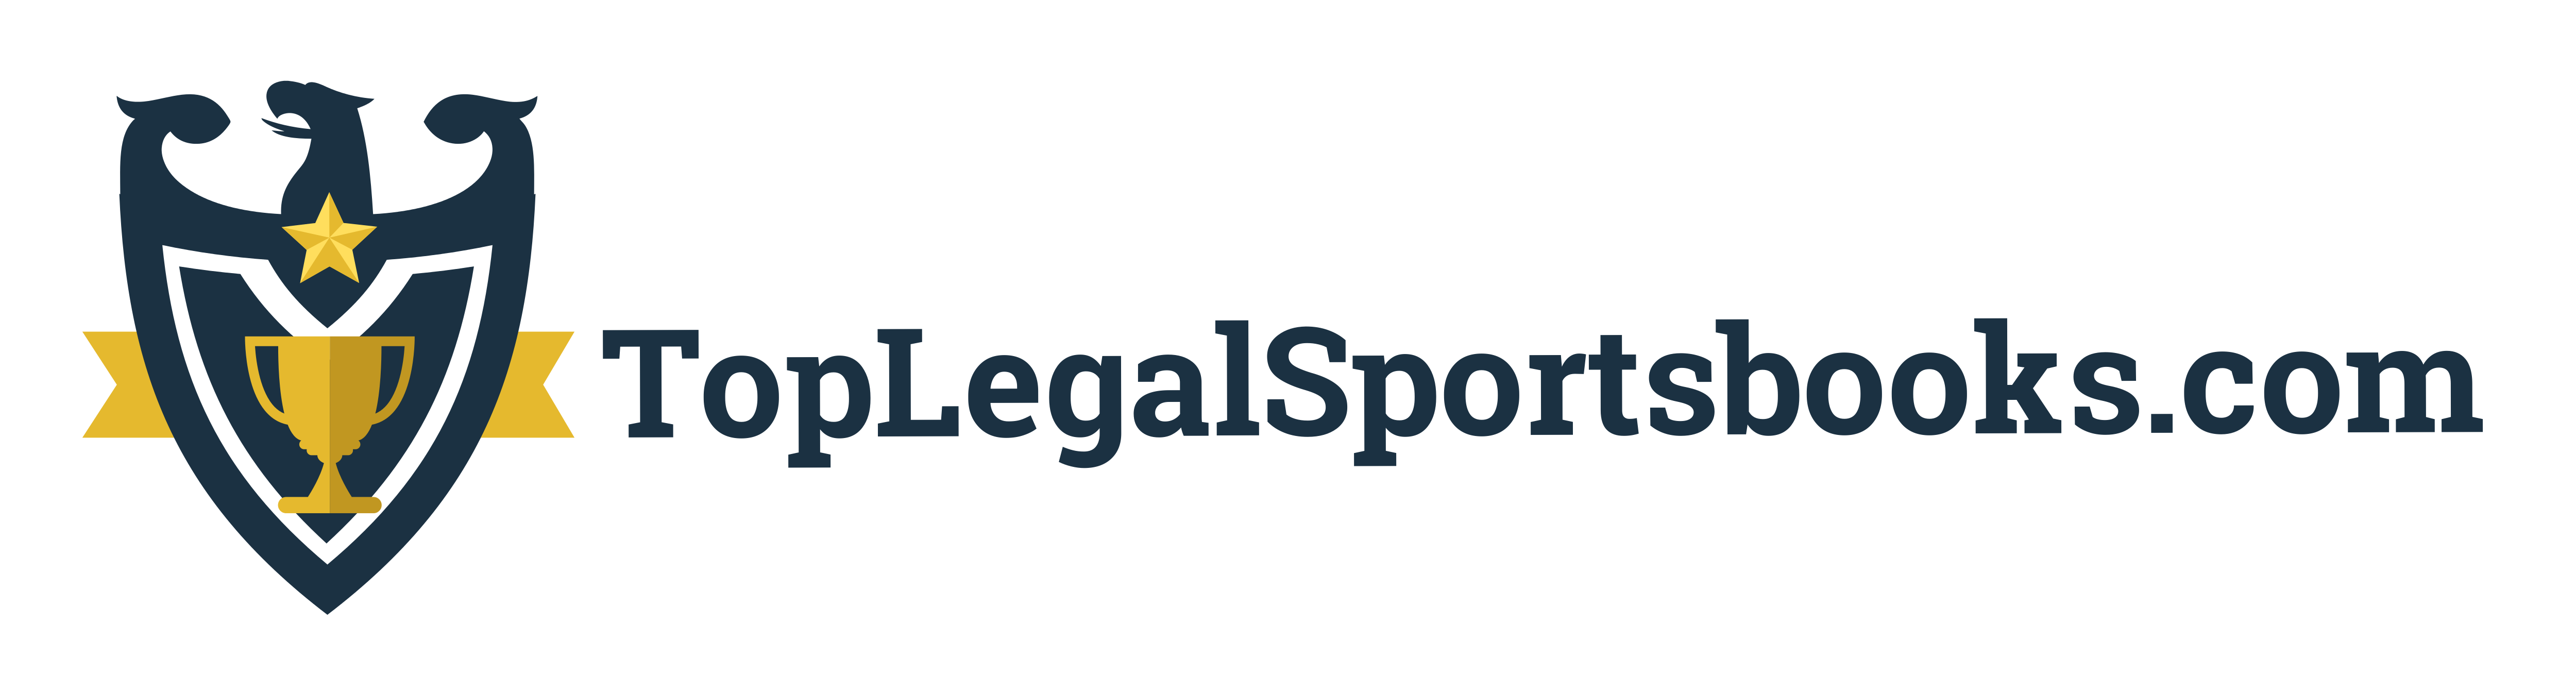 Top Legal Sportsbooks